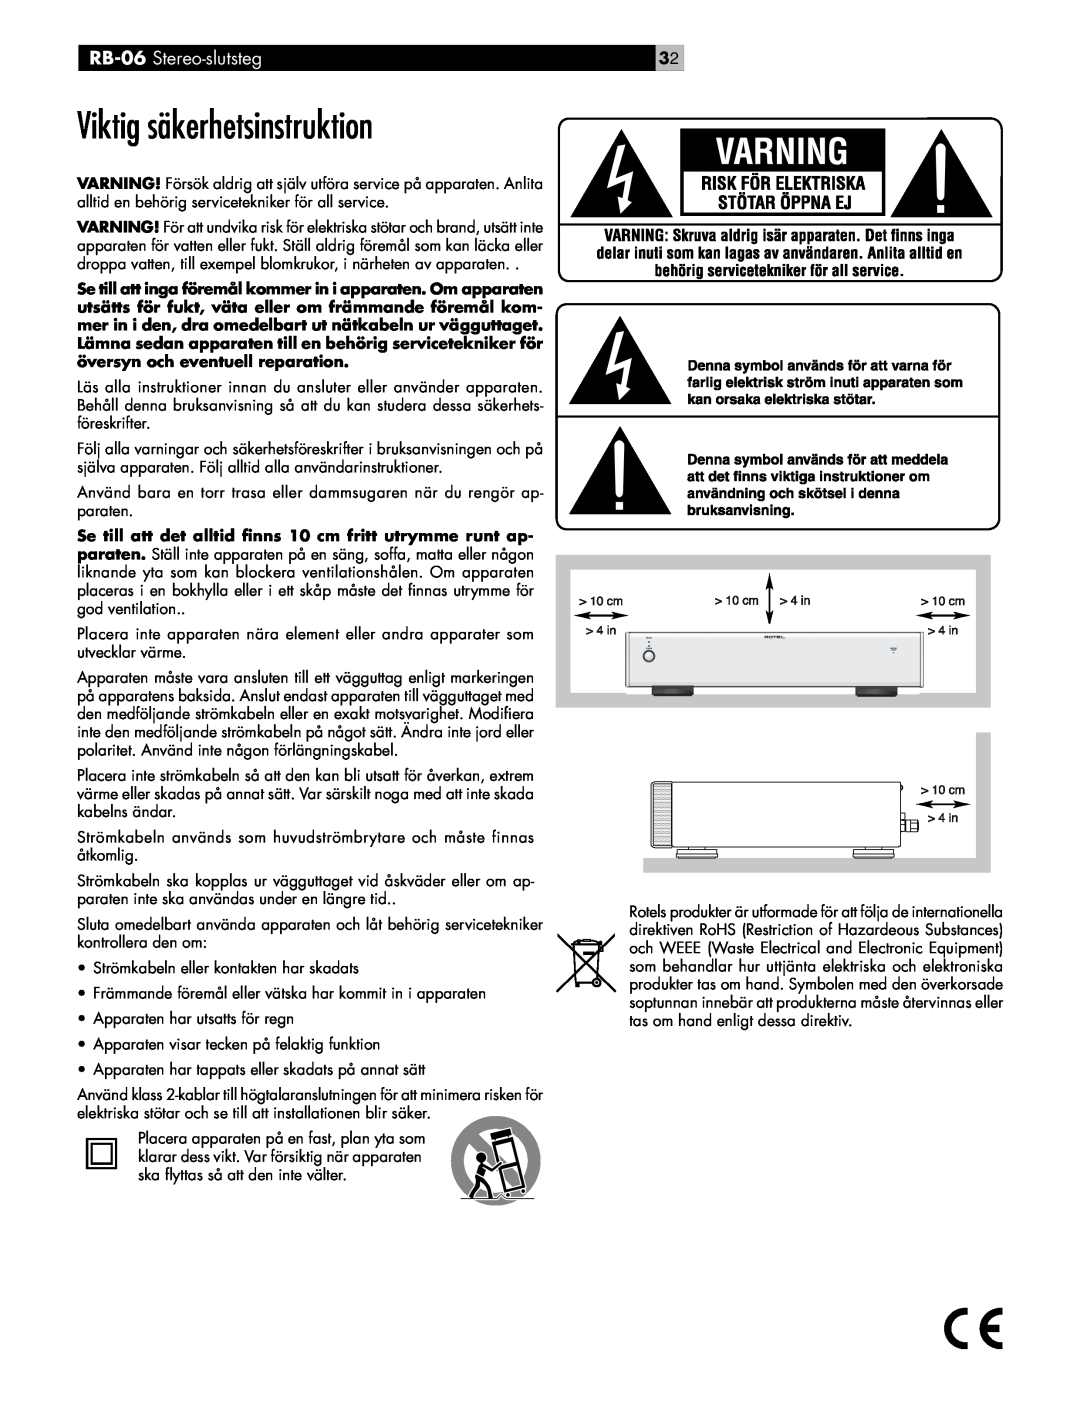 Rotel owner manual Viktig säkerhetsinstruktion, RB-06 Stereo-slutsteg 